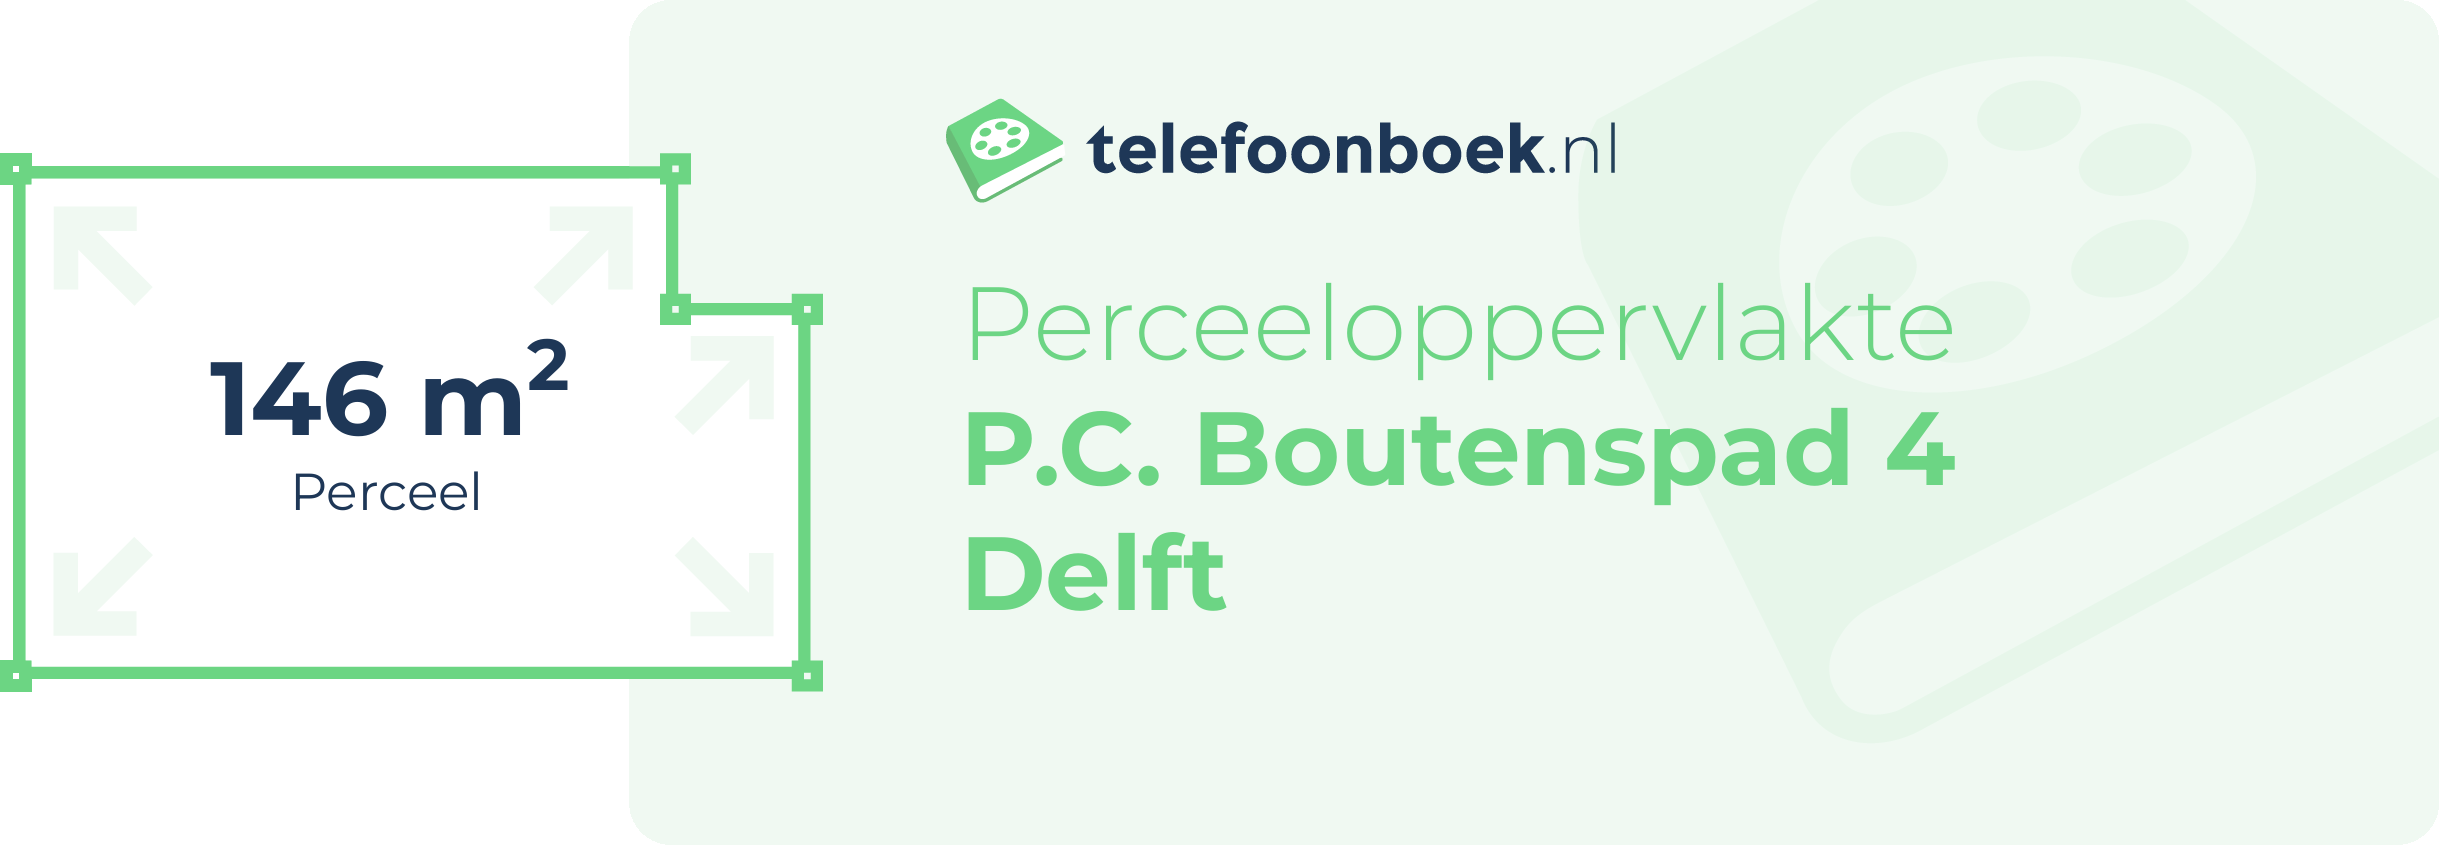 Perceeloppervlakte P.C. Boutenspad 4 Delft